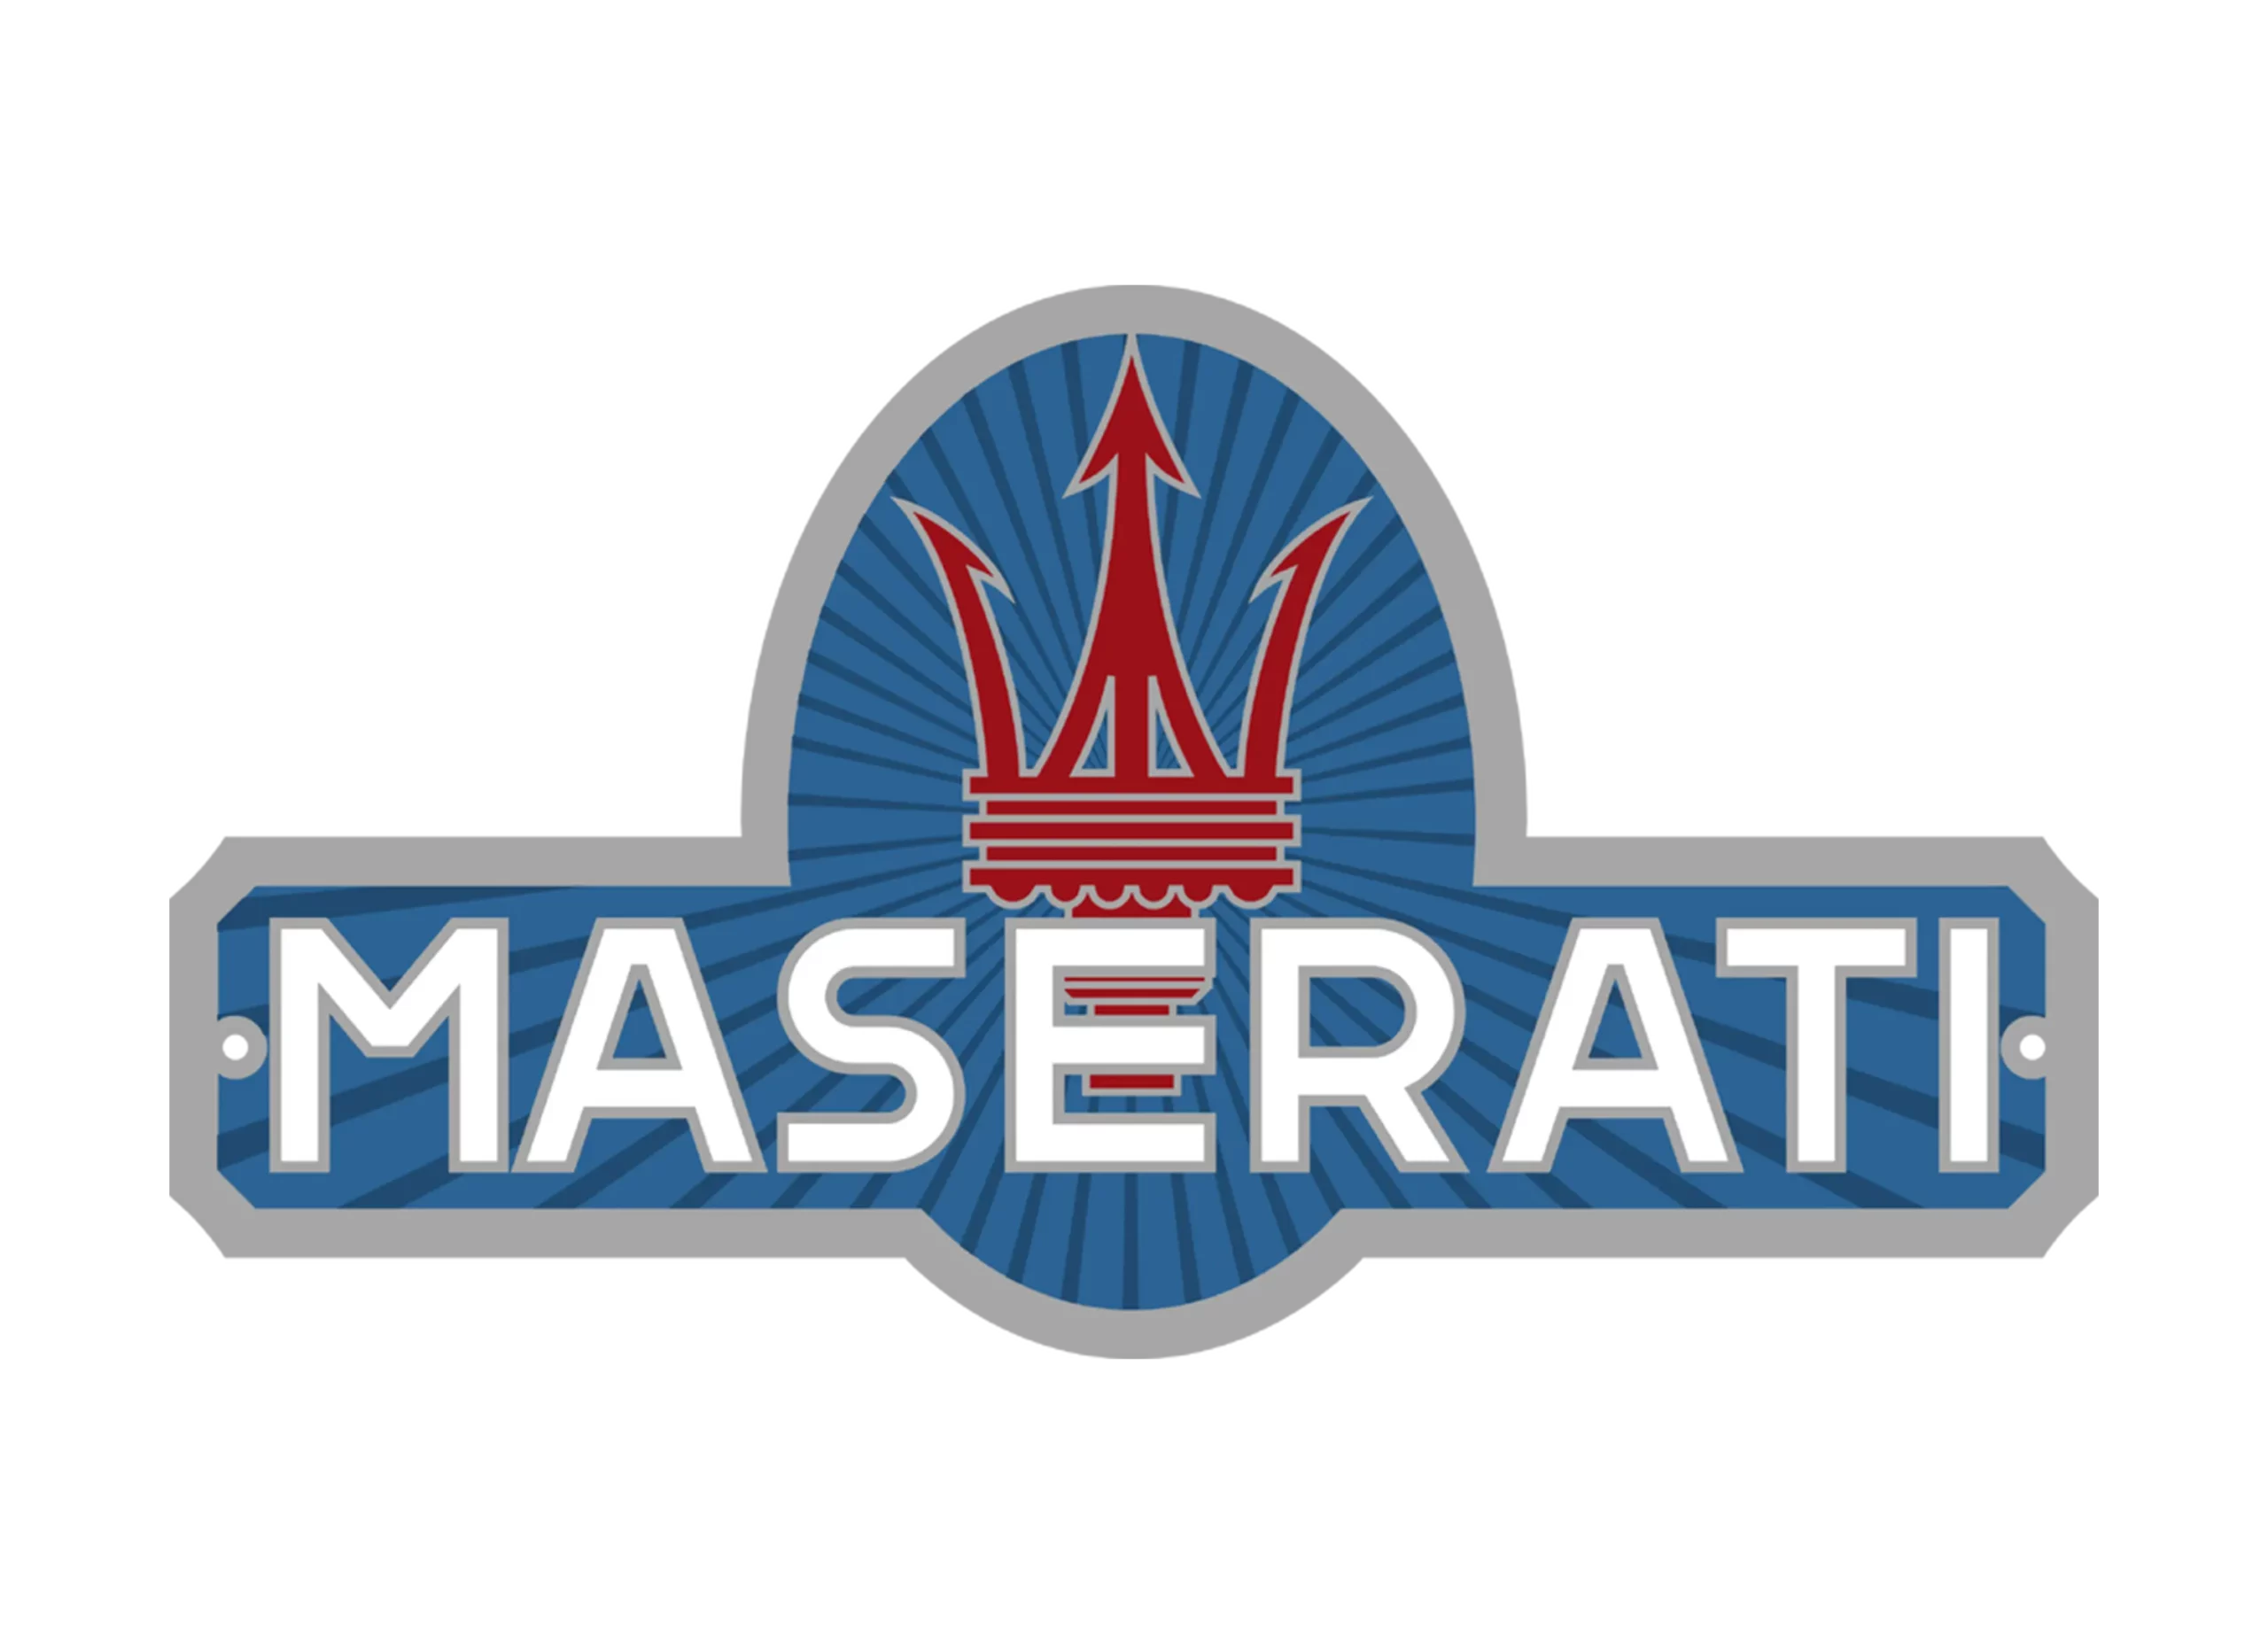 Maserati logo 1943-1951